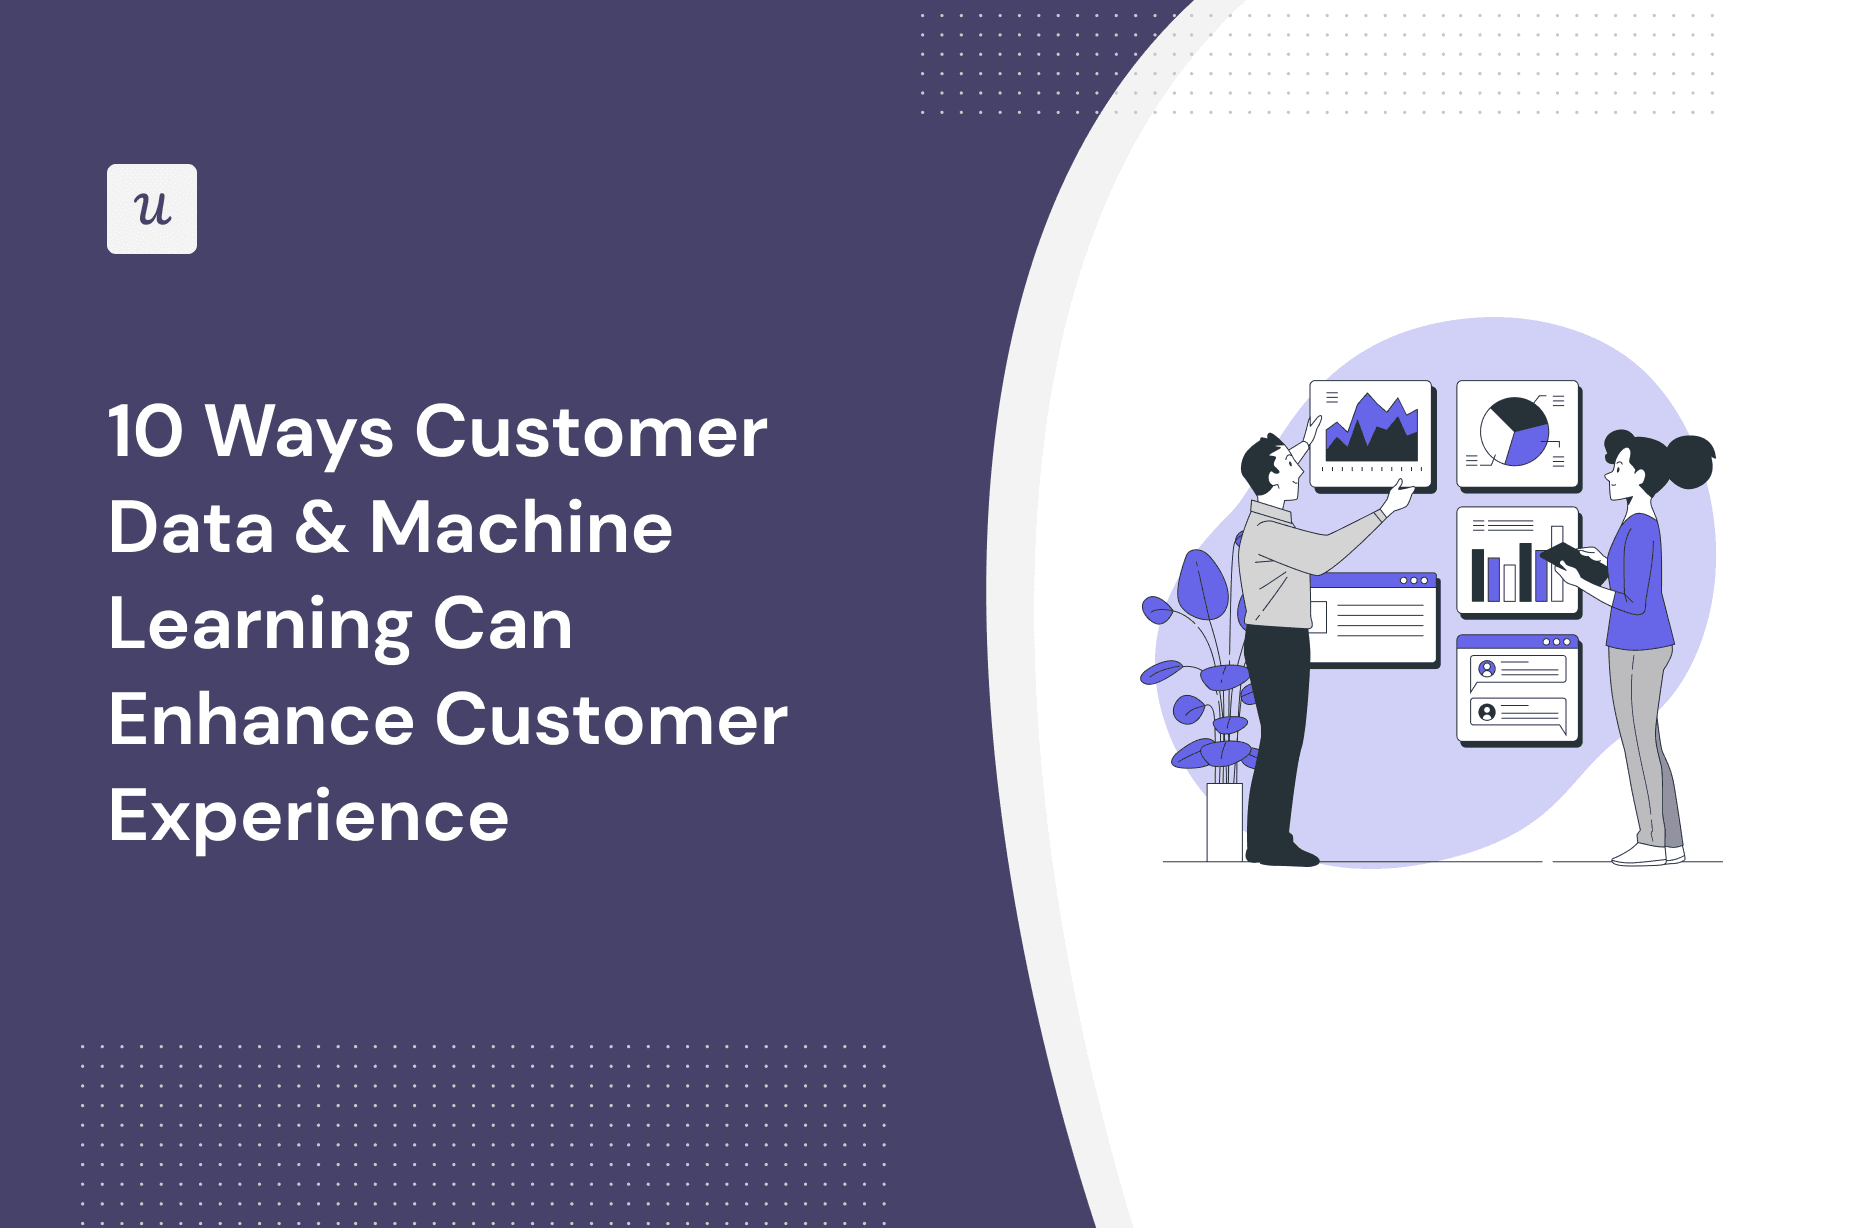 10 Ways Customer Data & Machine Learning Can Enhance Customer Experience cover